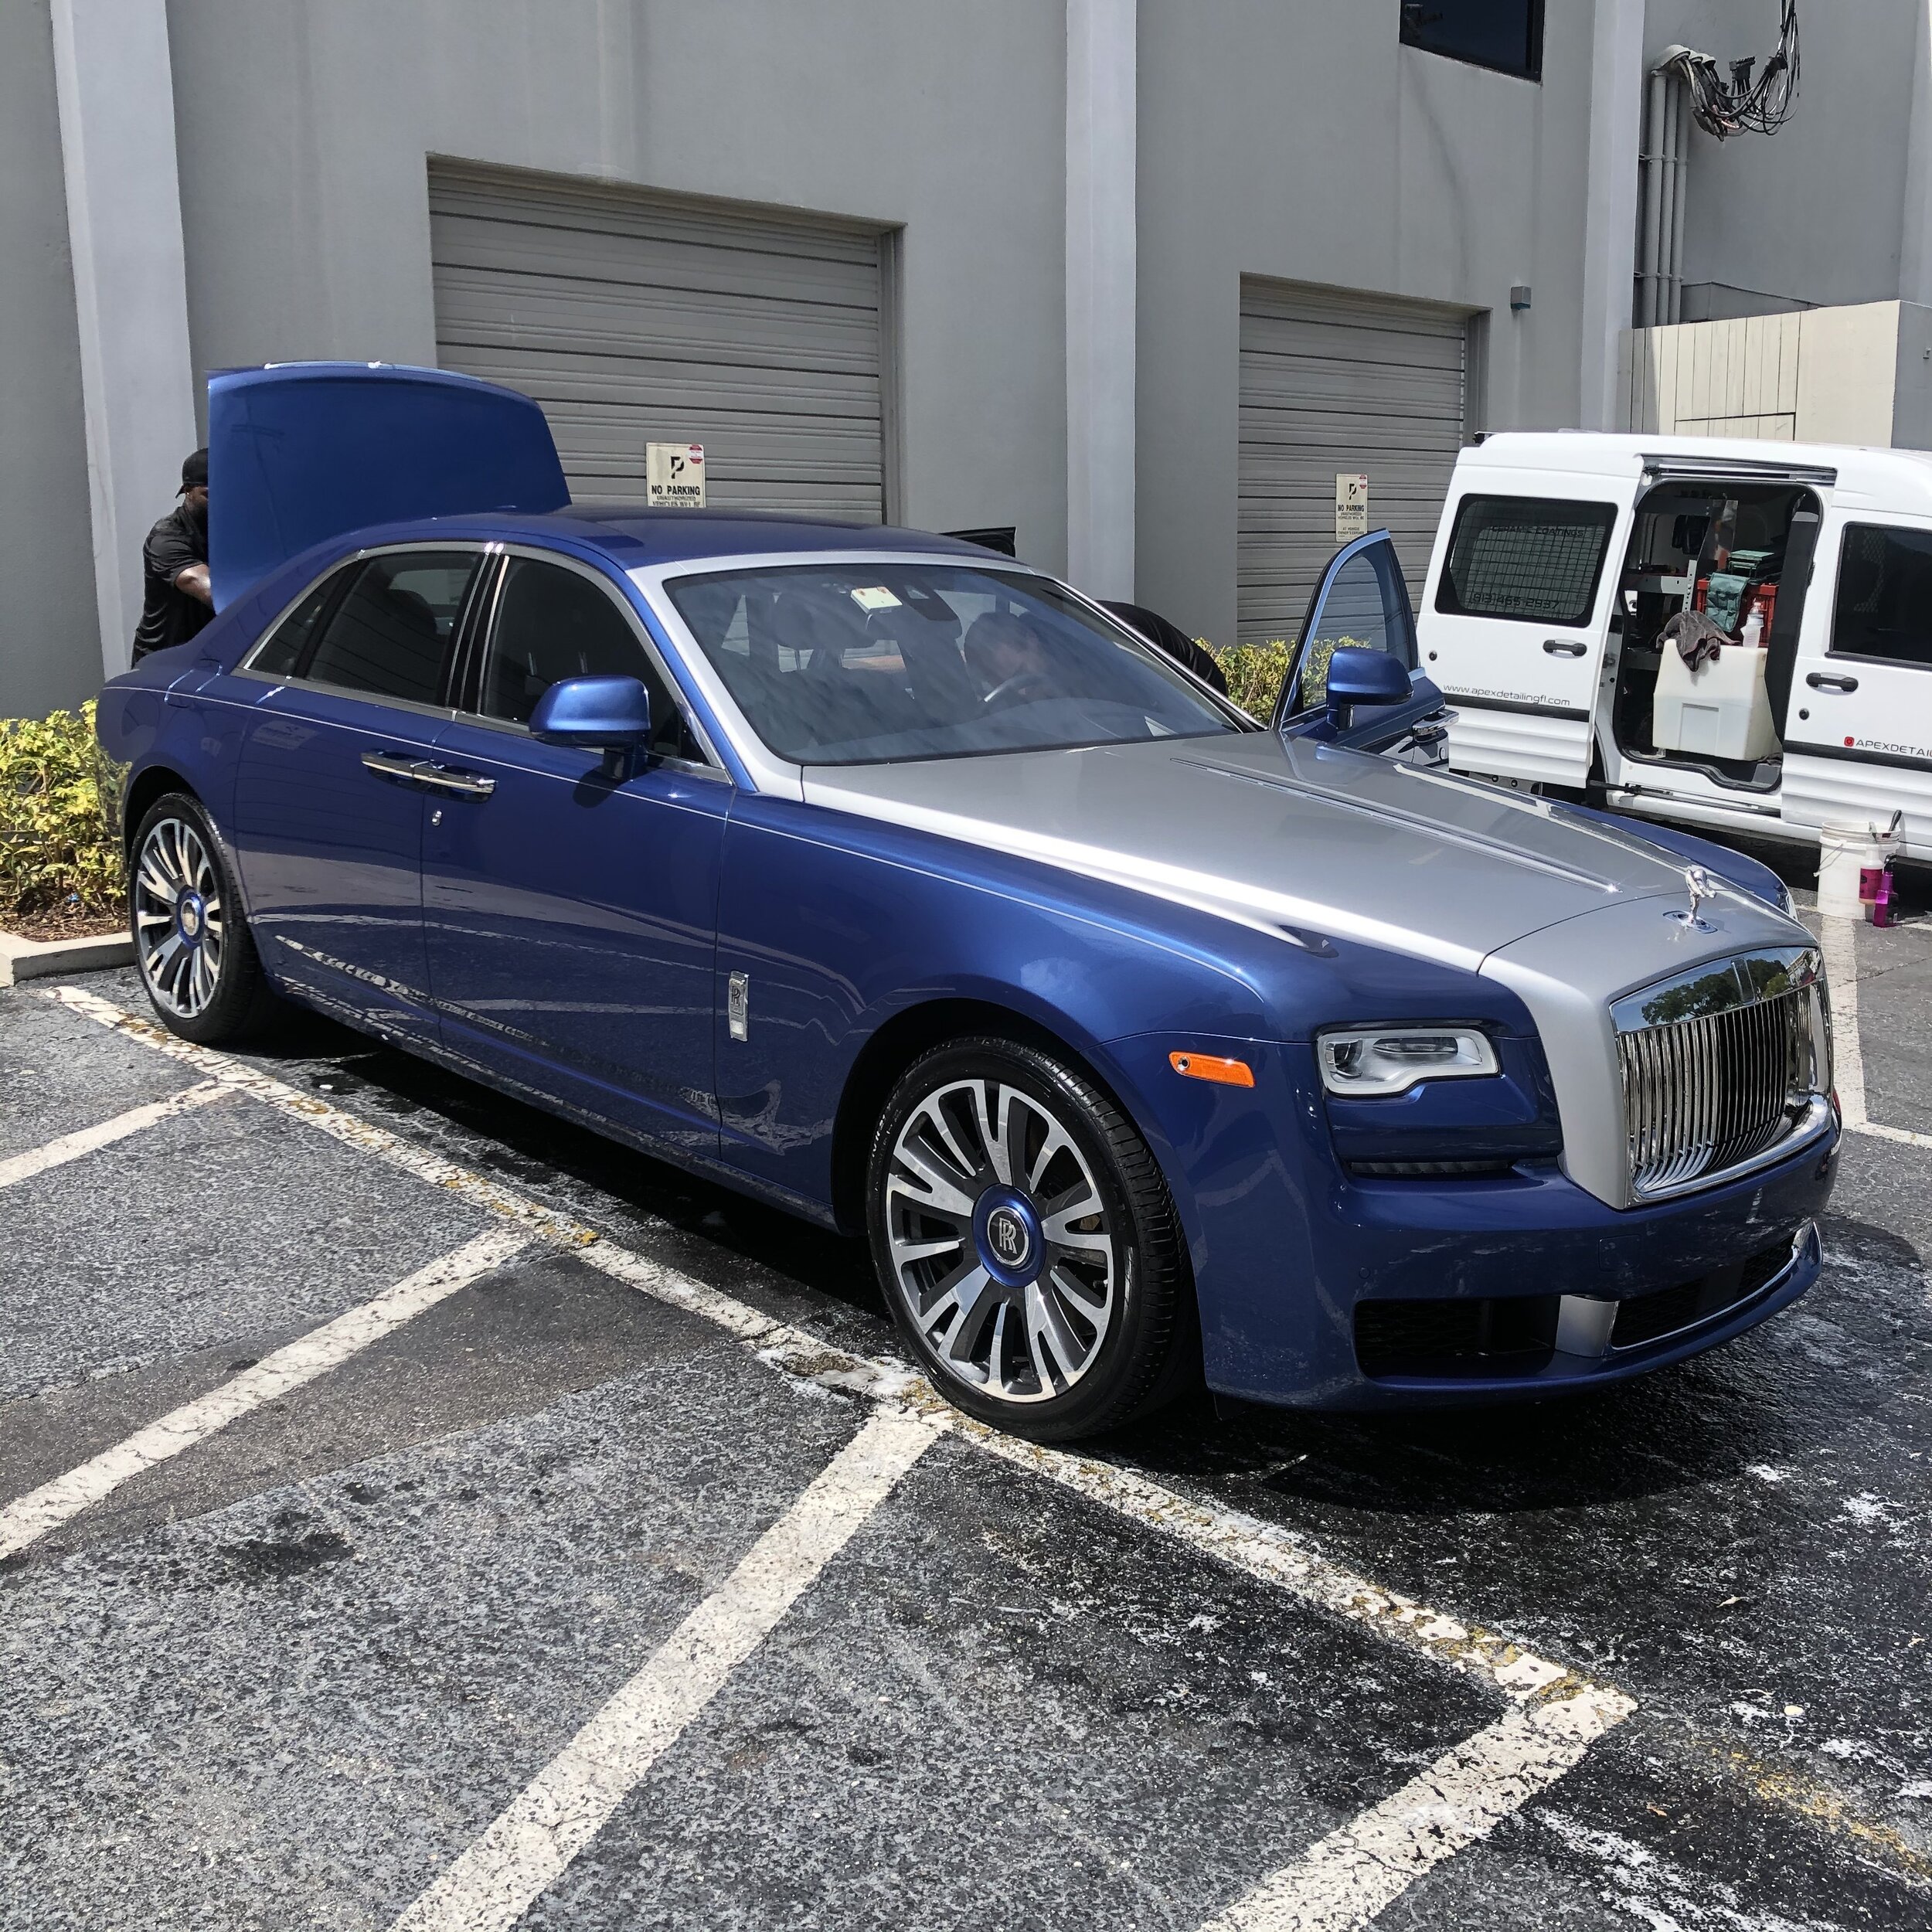 Rolls Royce Detailing Service